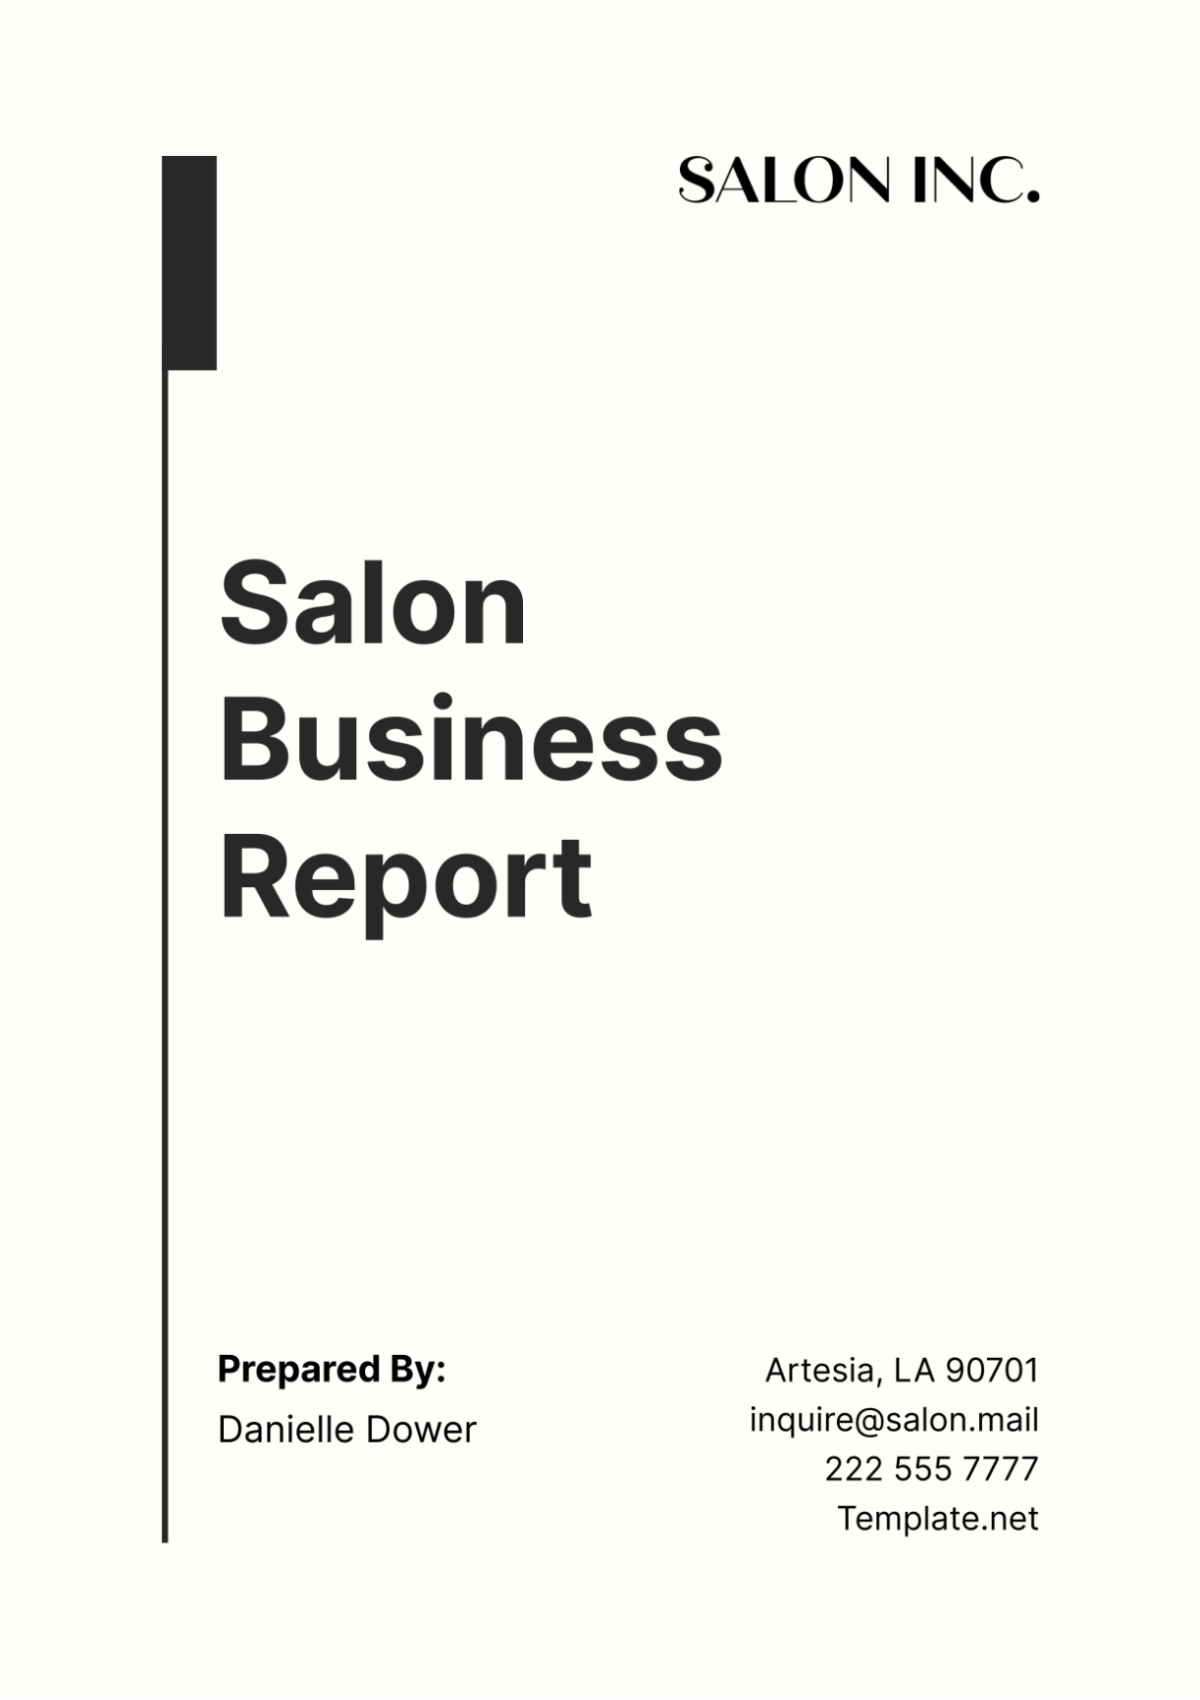 Salon Business Report Template